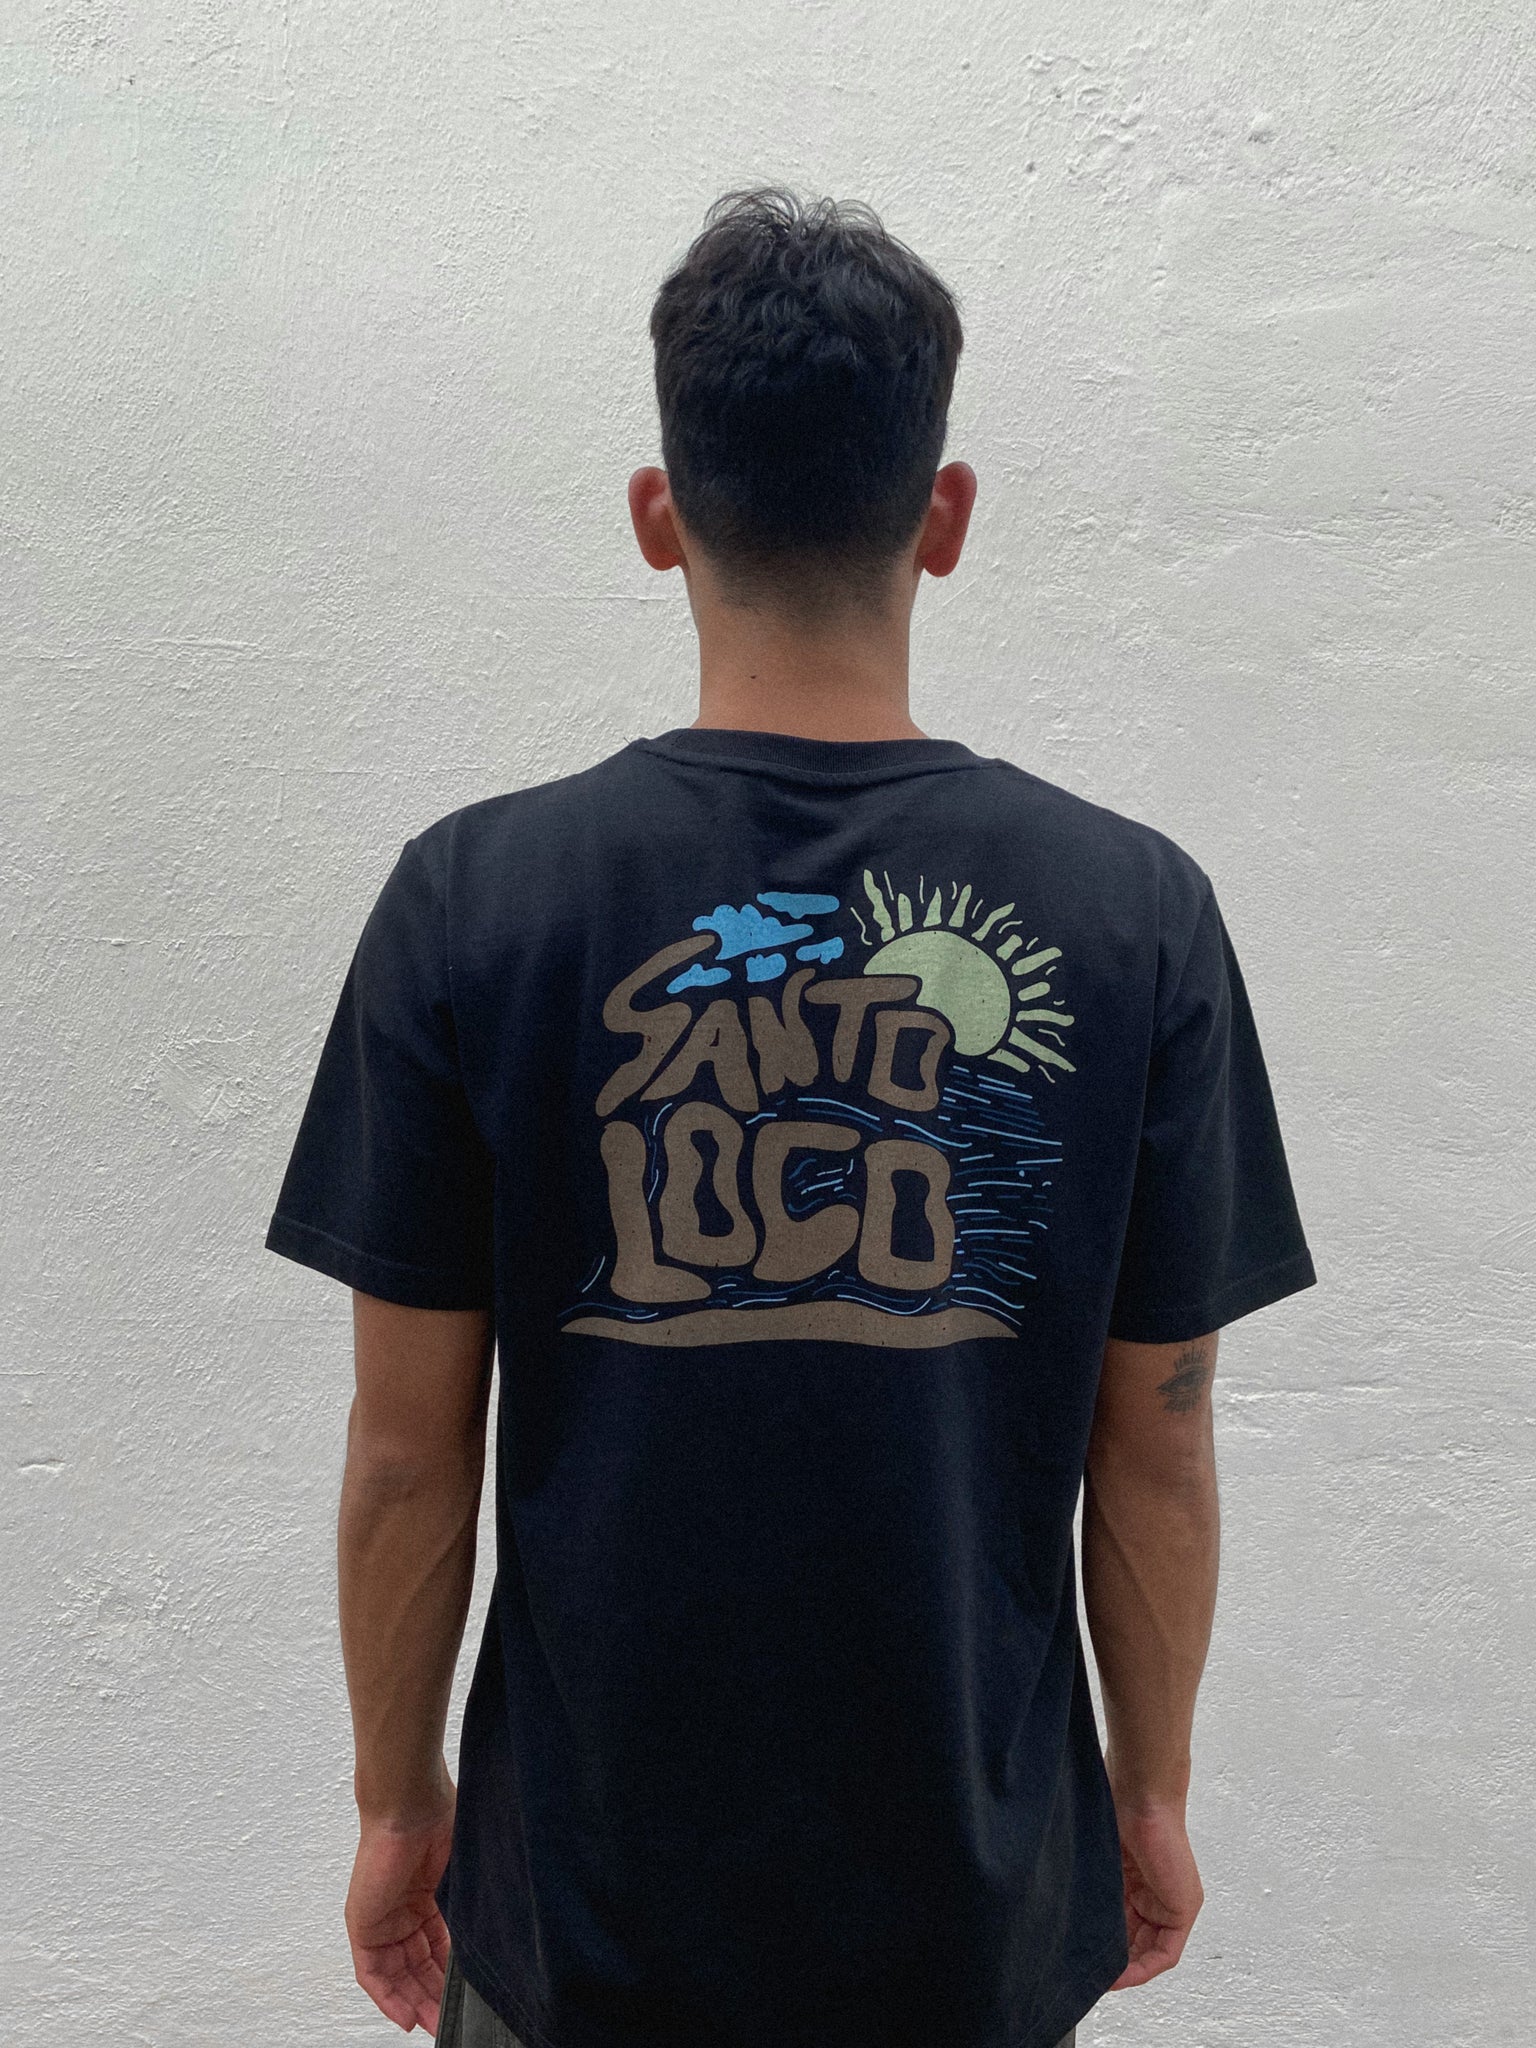 SantoLoco Golden Hour T-Shirt